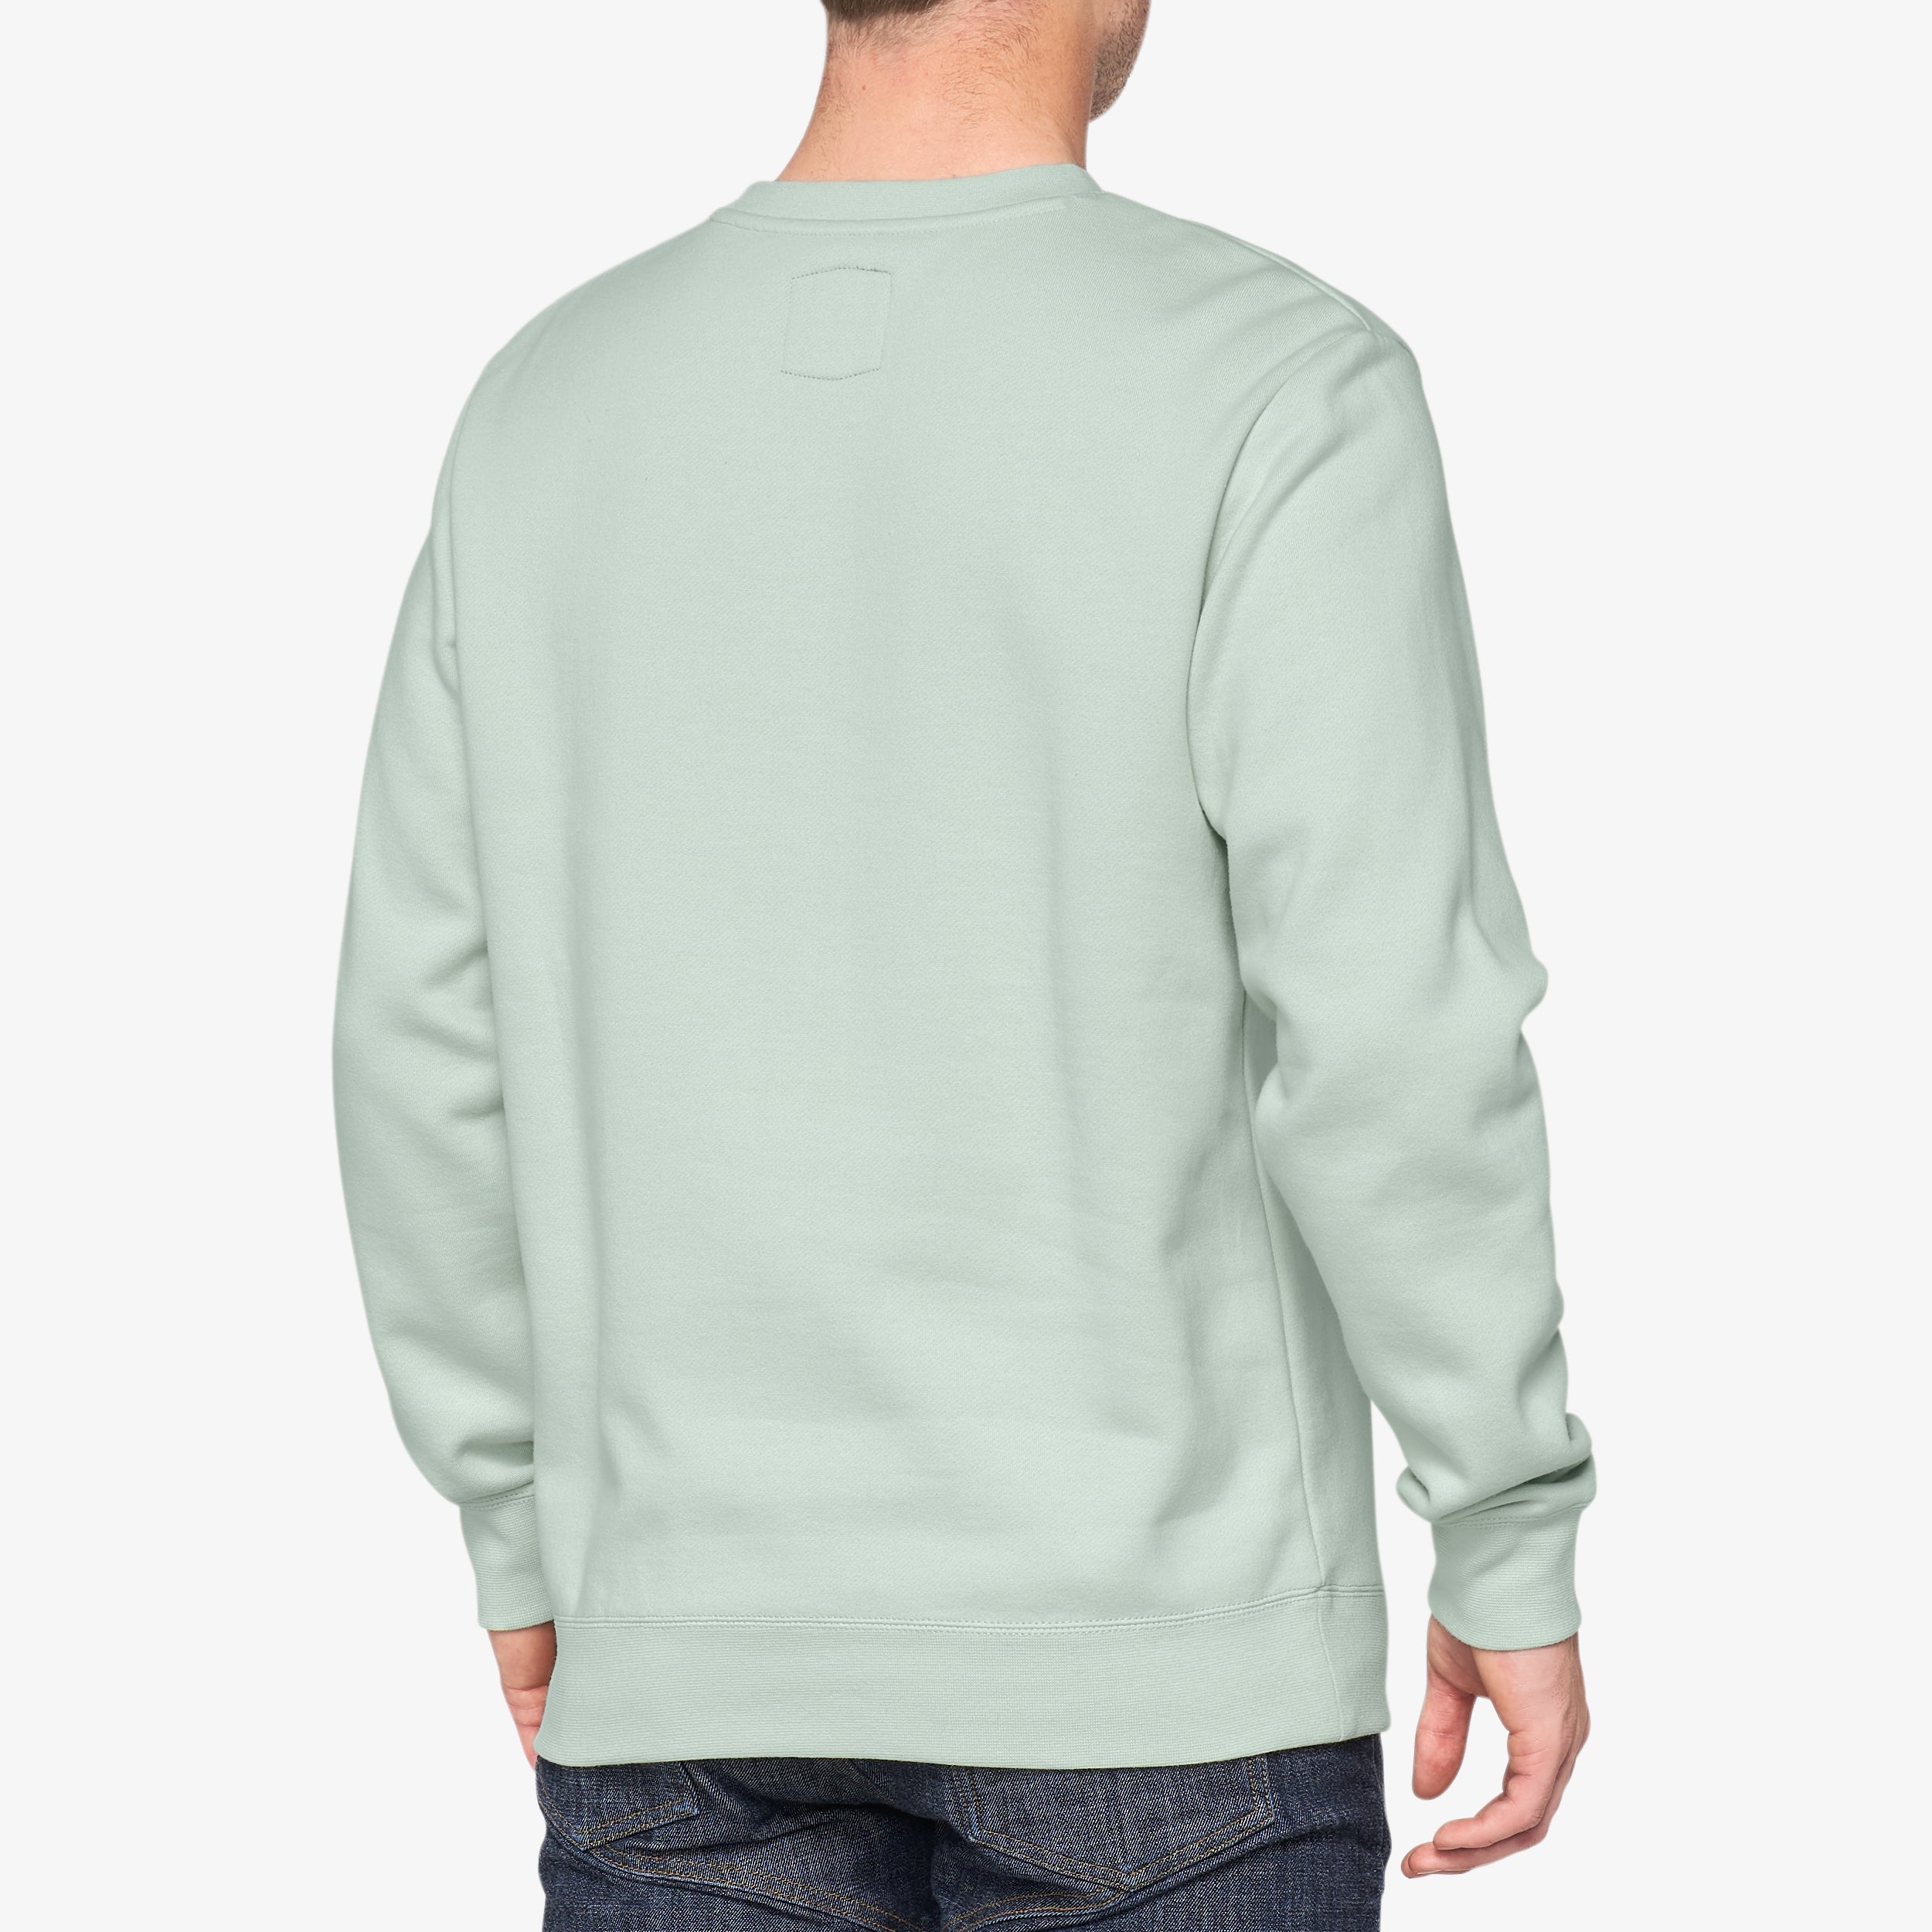 MANIFESTO Crewneck Sweatshirt Pale Aqua